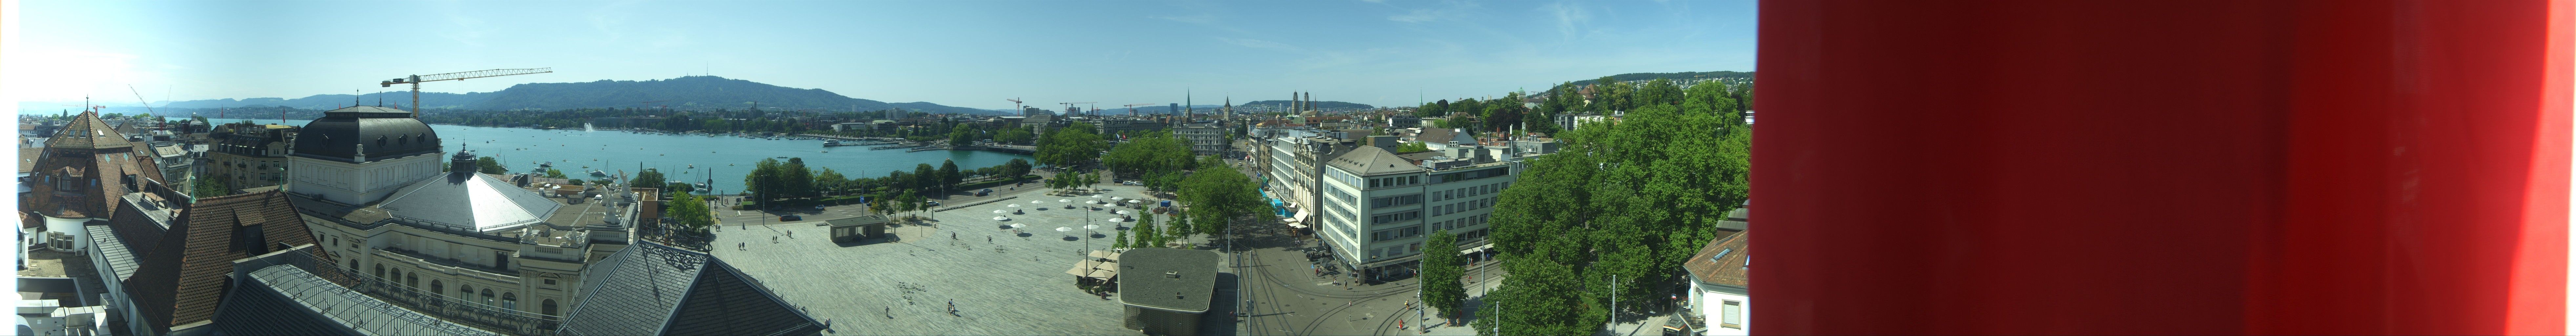 Zürich: Sechseläutenplatz